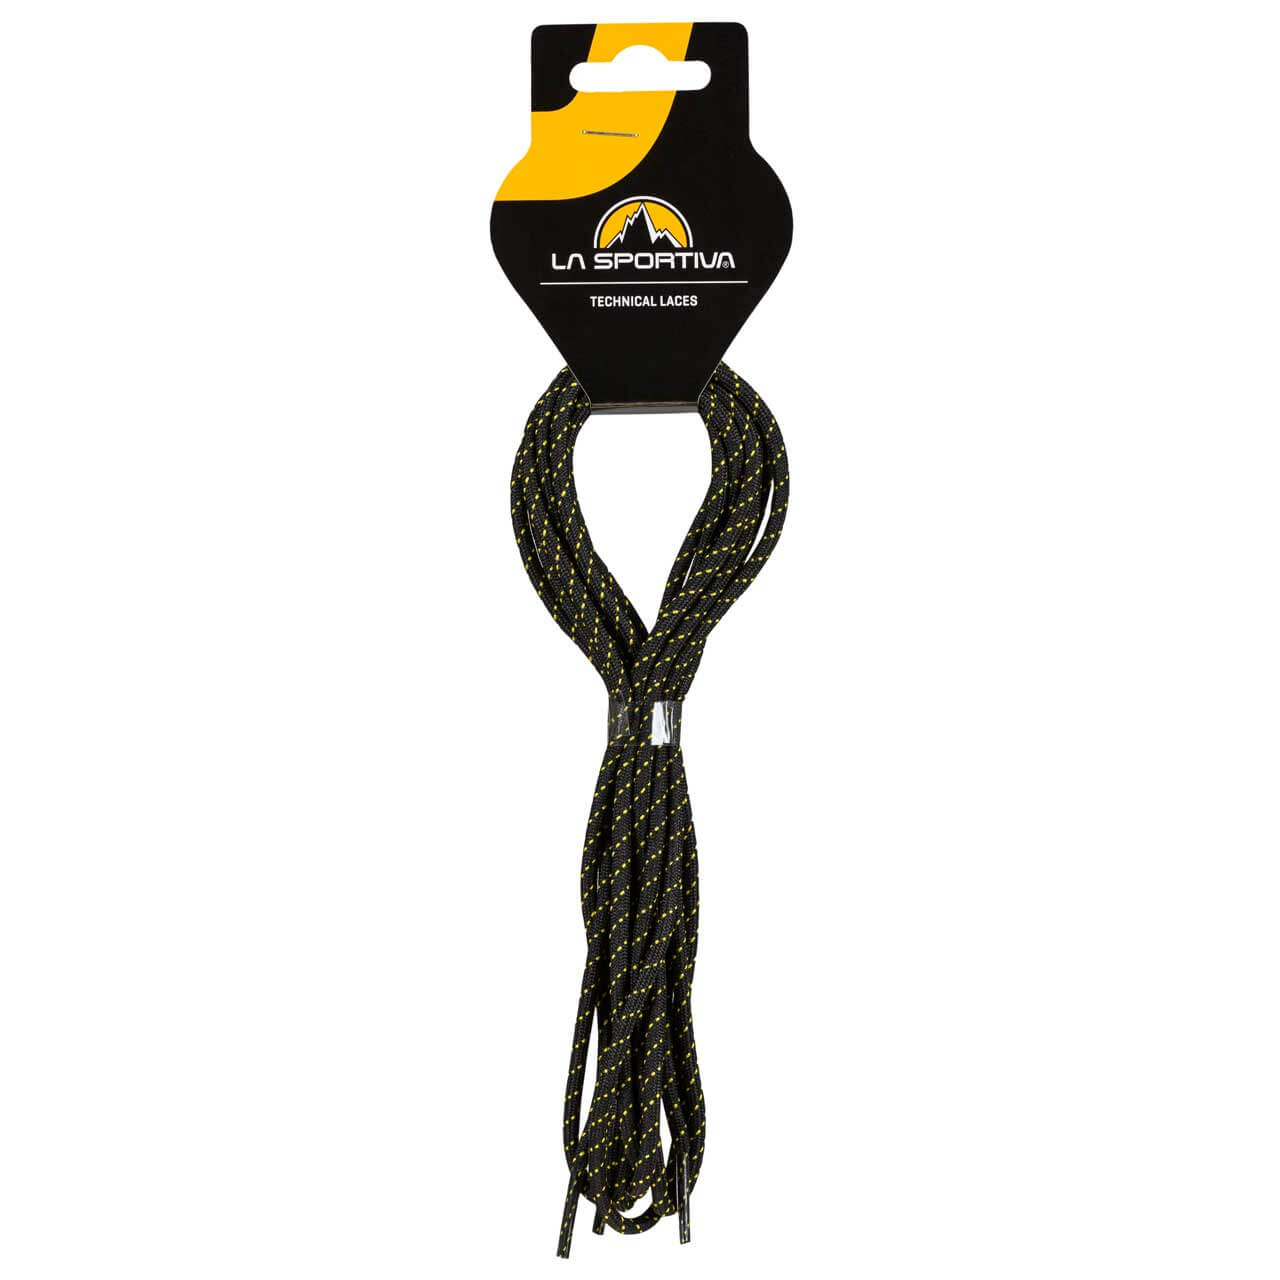 La Sportiva Approach Laces Schuhbänder - 173 cm, Black/Yellow